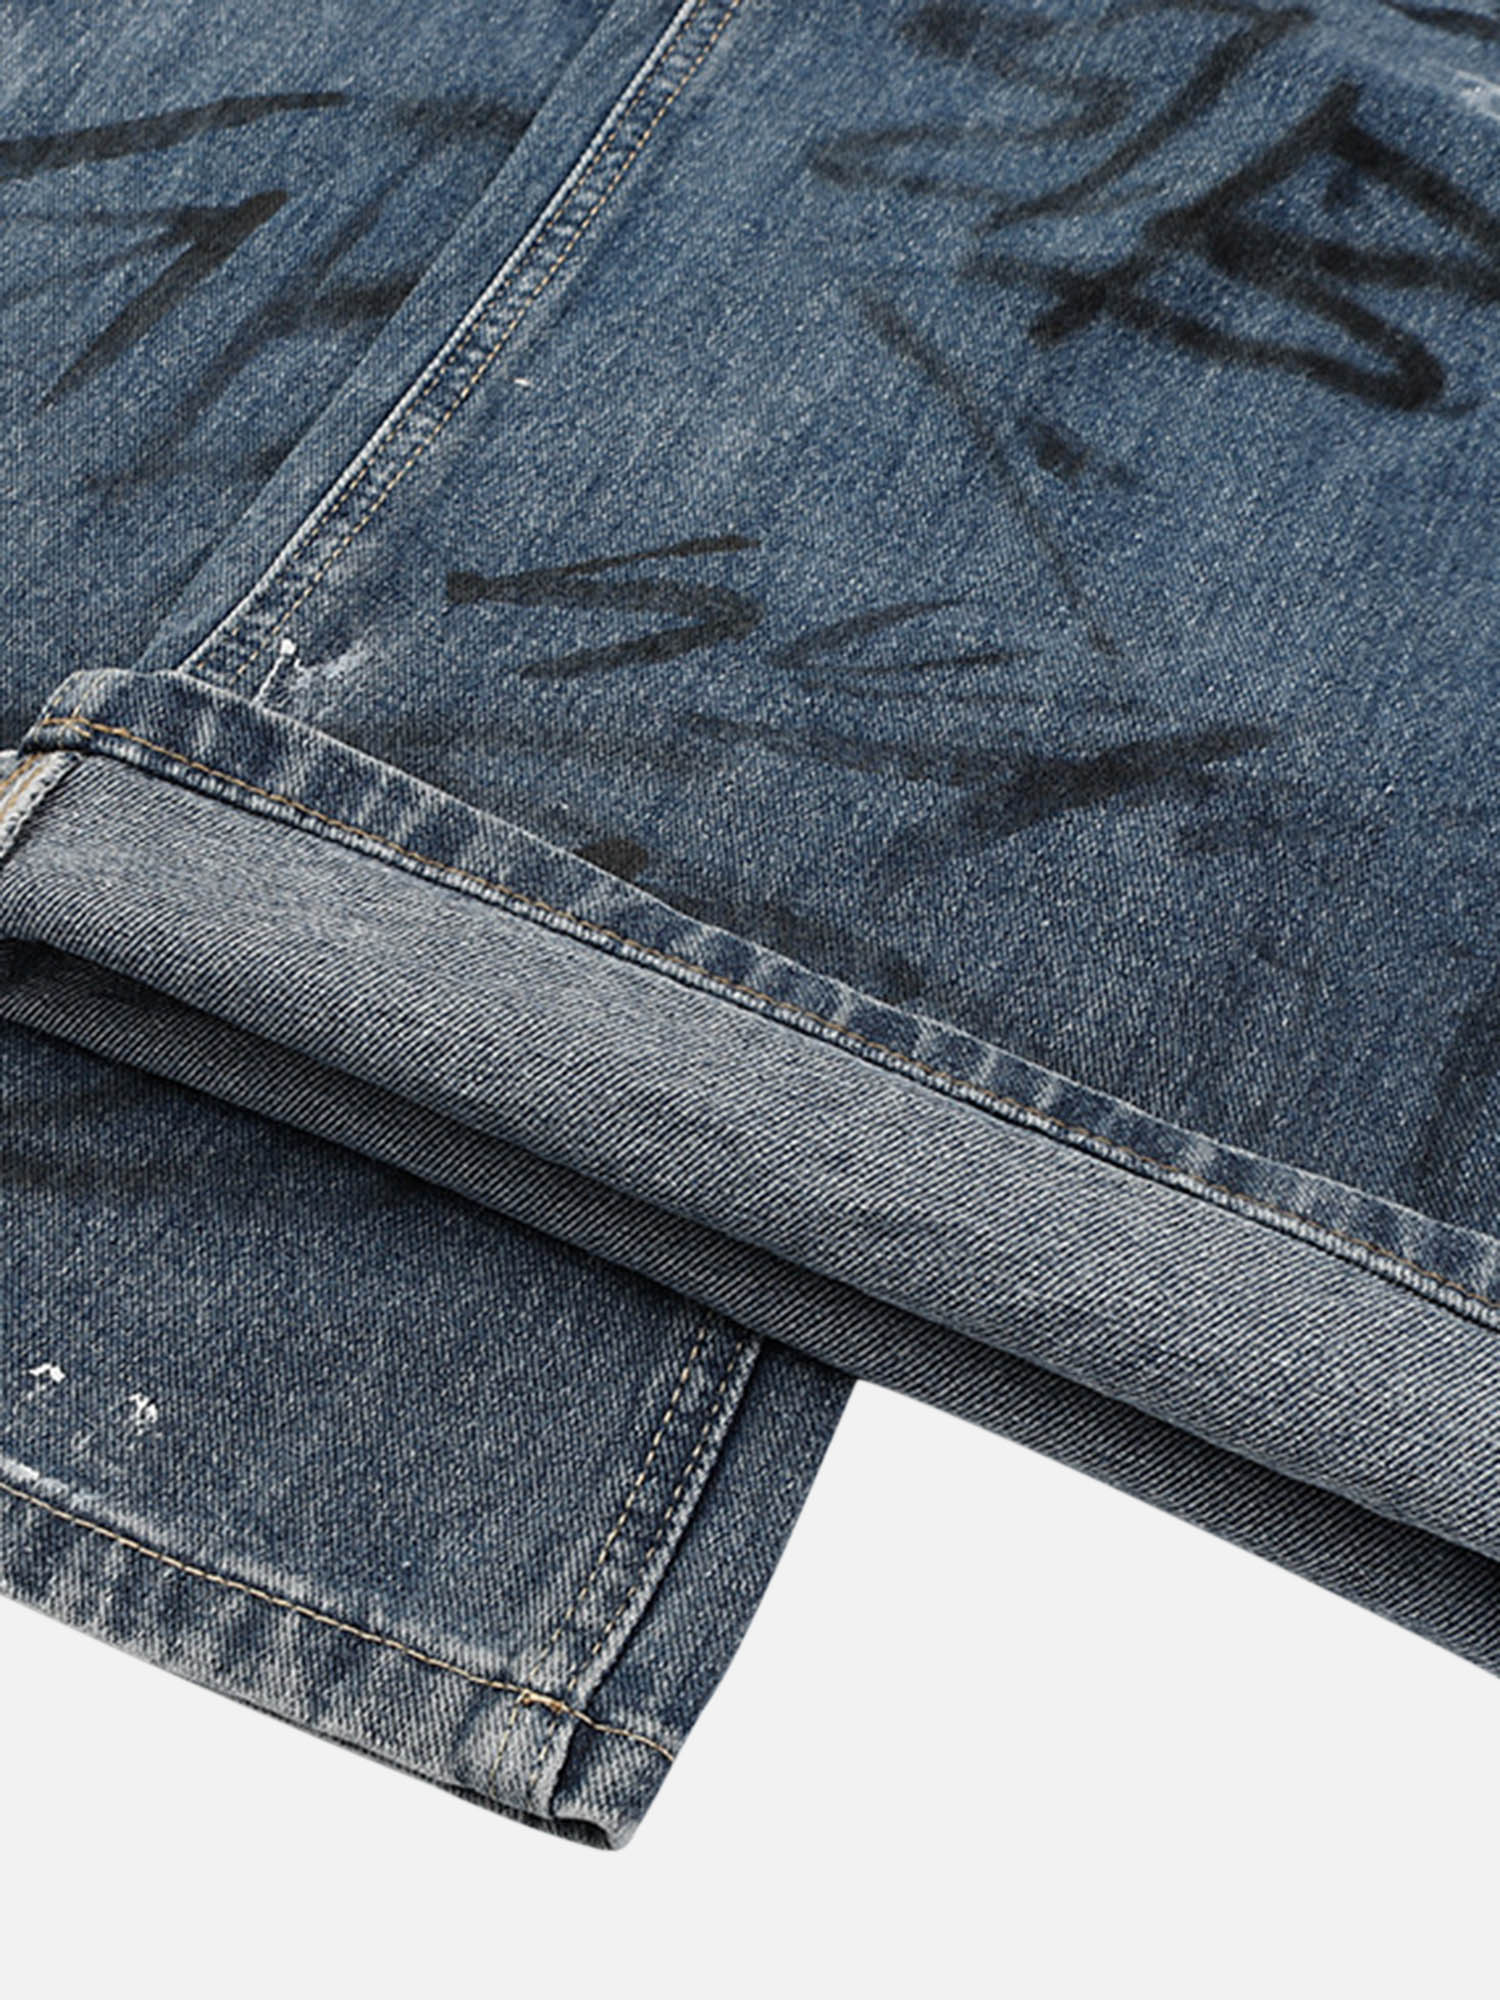 American Street Fashion Fun Graffiti Washed Distressed Jeans